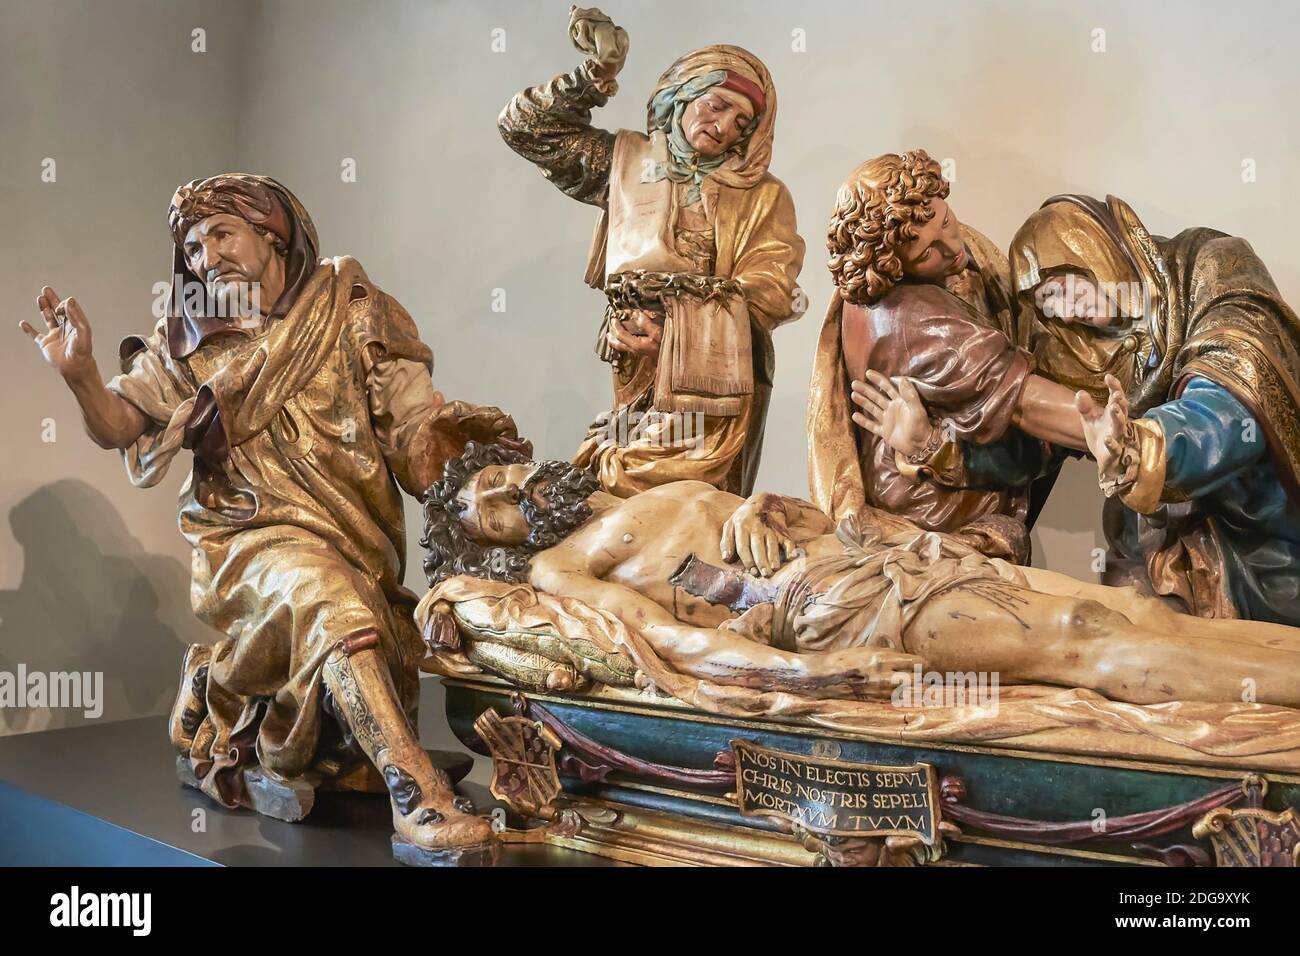 The Holy Burial of the 16th century sculptor Juan de Juni in the Polychrome Sculpture Museum Colegio de San Gregorio in the city of Valladolid, Spain Stock Photo